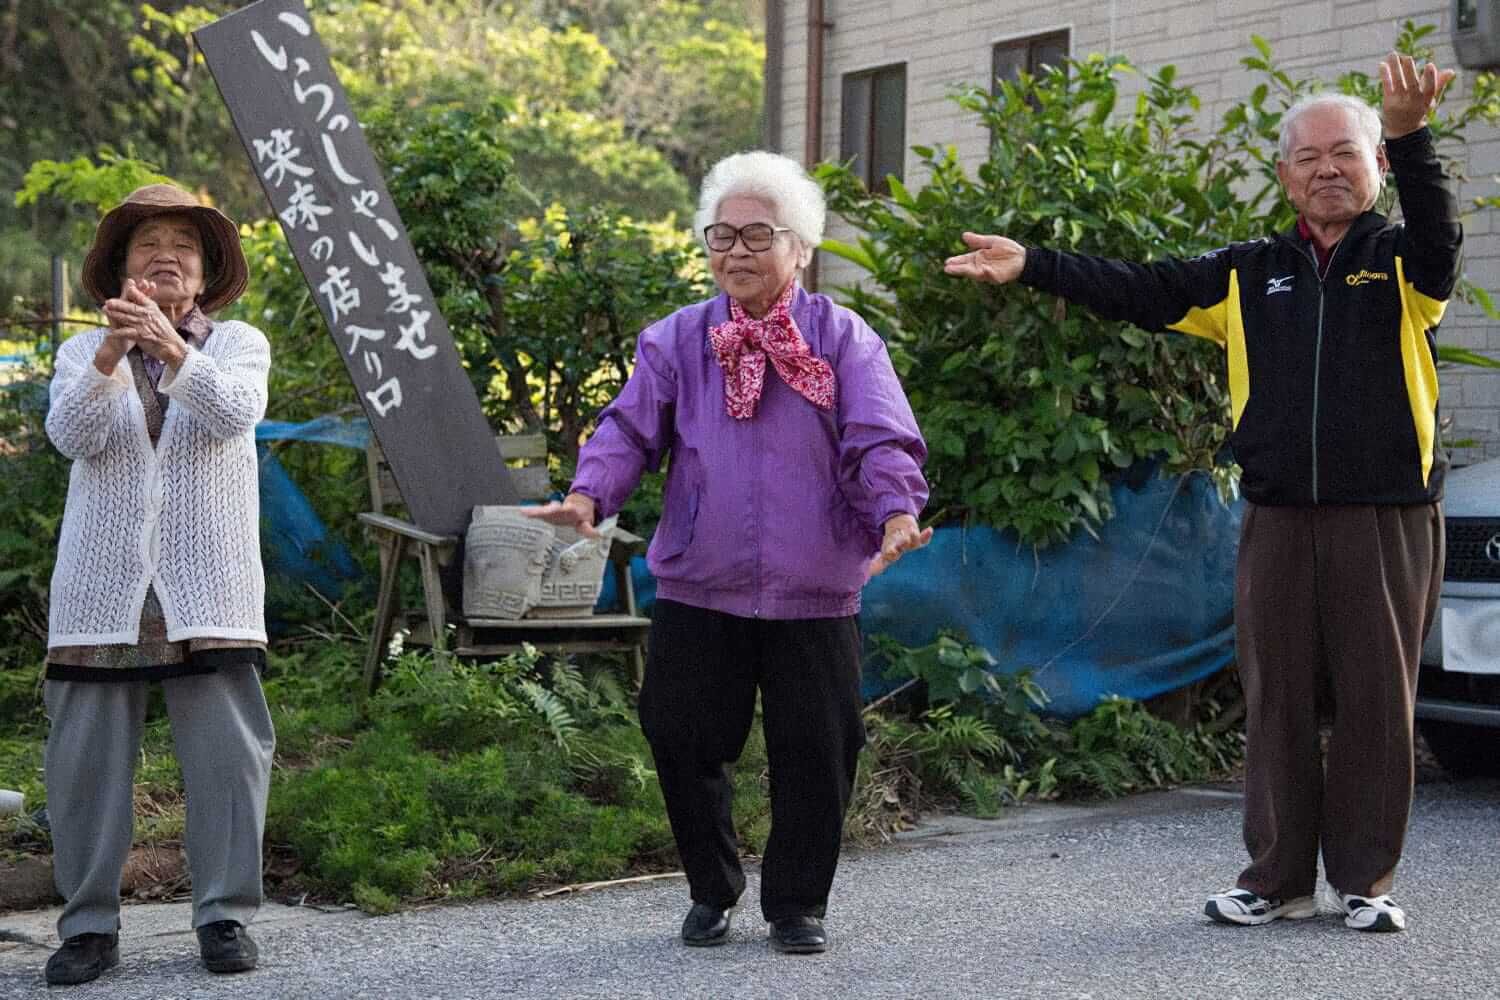 Жители деревни Огими. Фото: okinawa.stripes.com